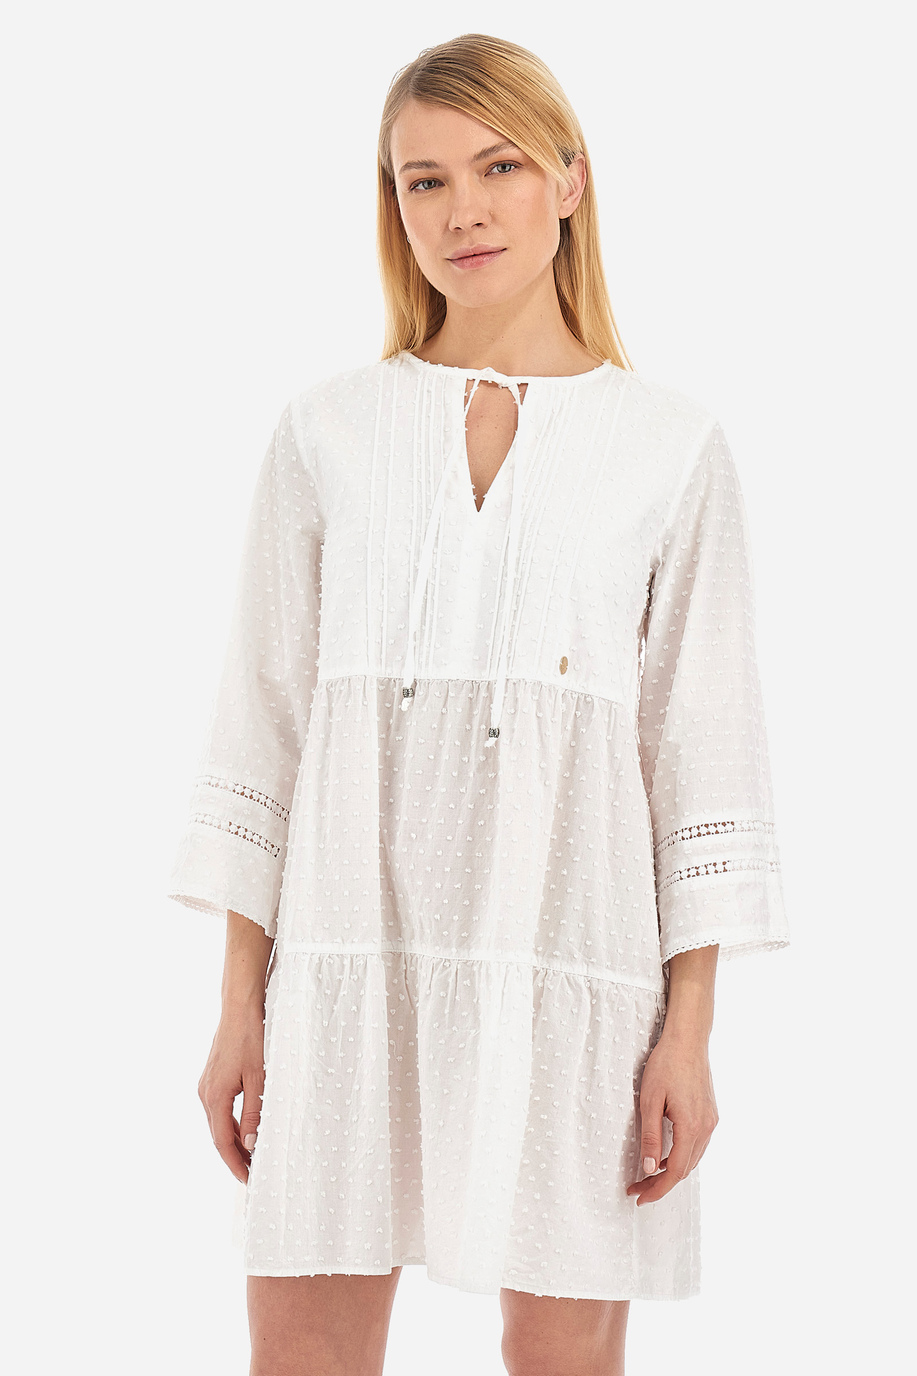 Robe femme 100% coton, coupe classique - Valaria - Robes | La Martina - Official Online Shop